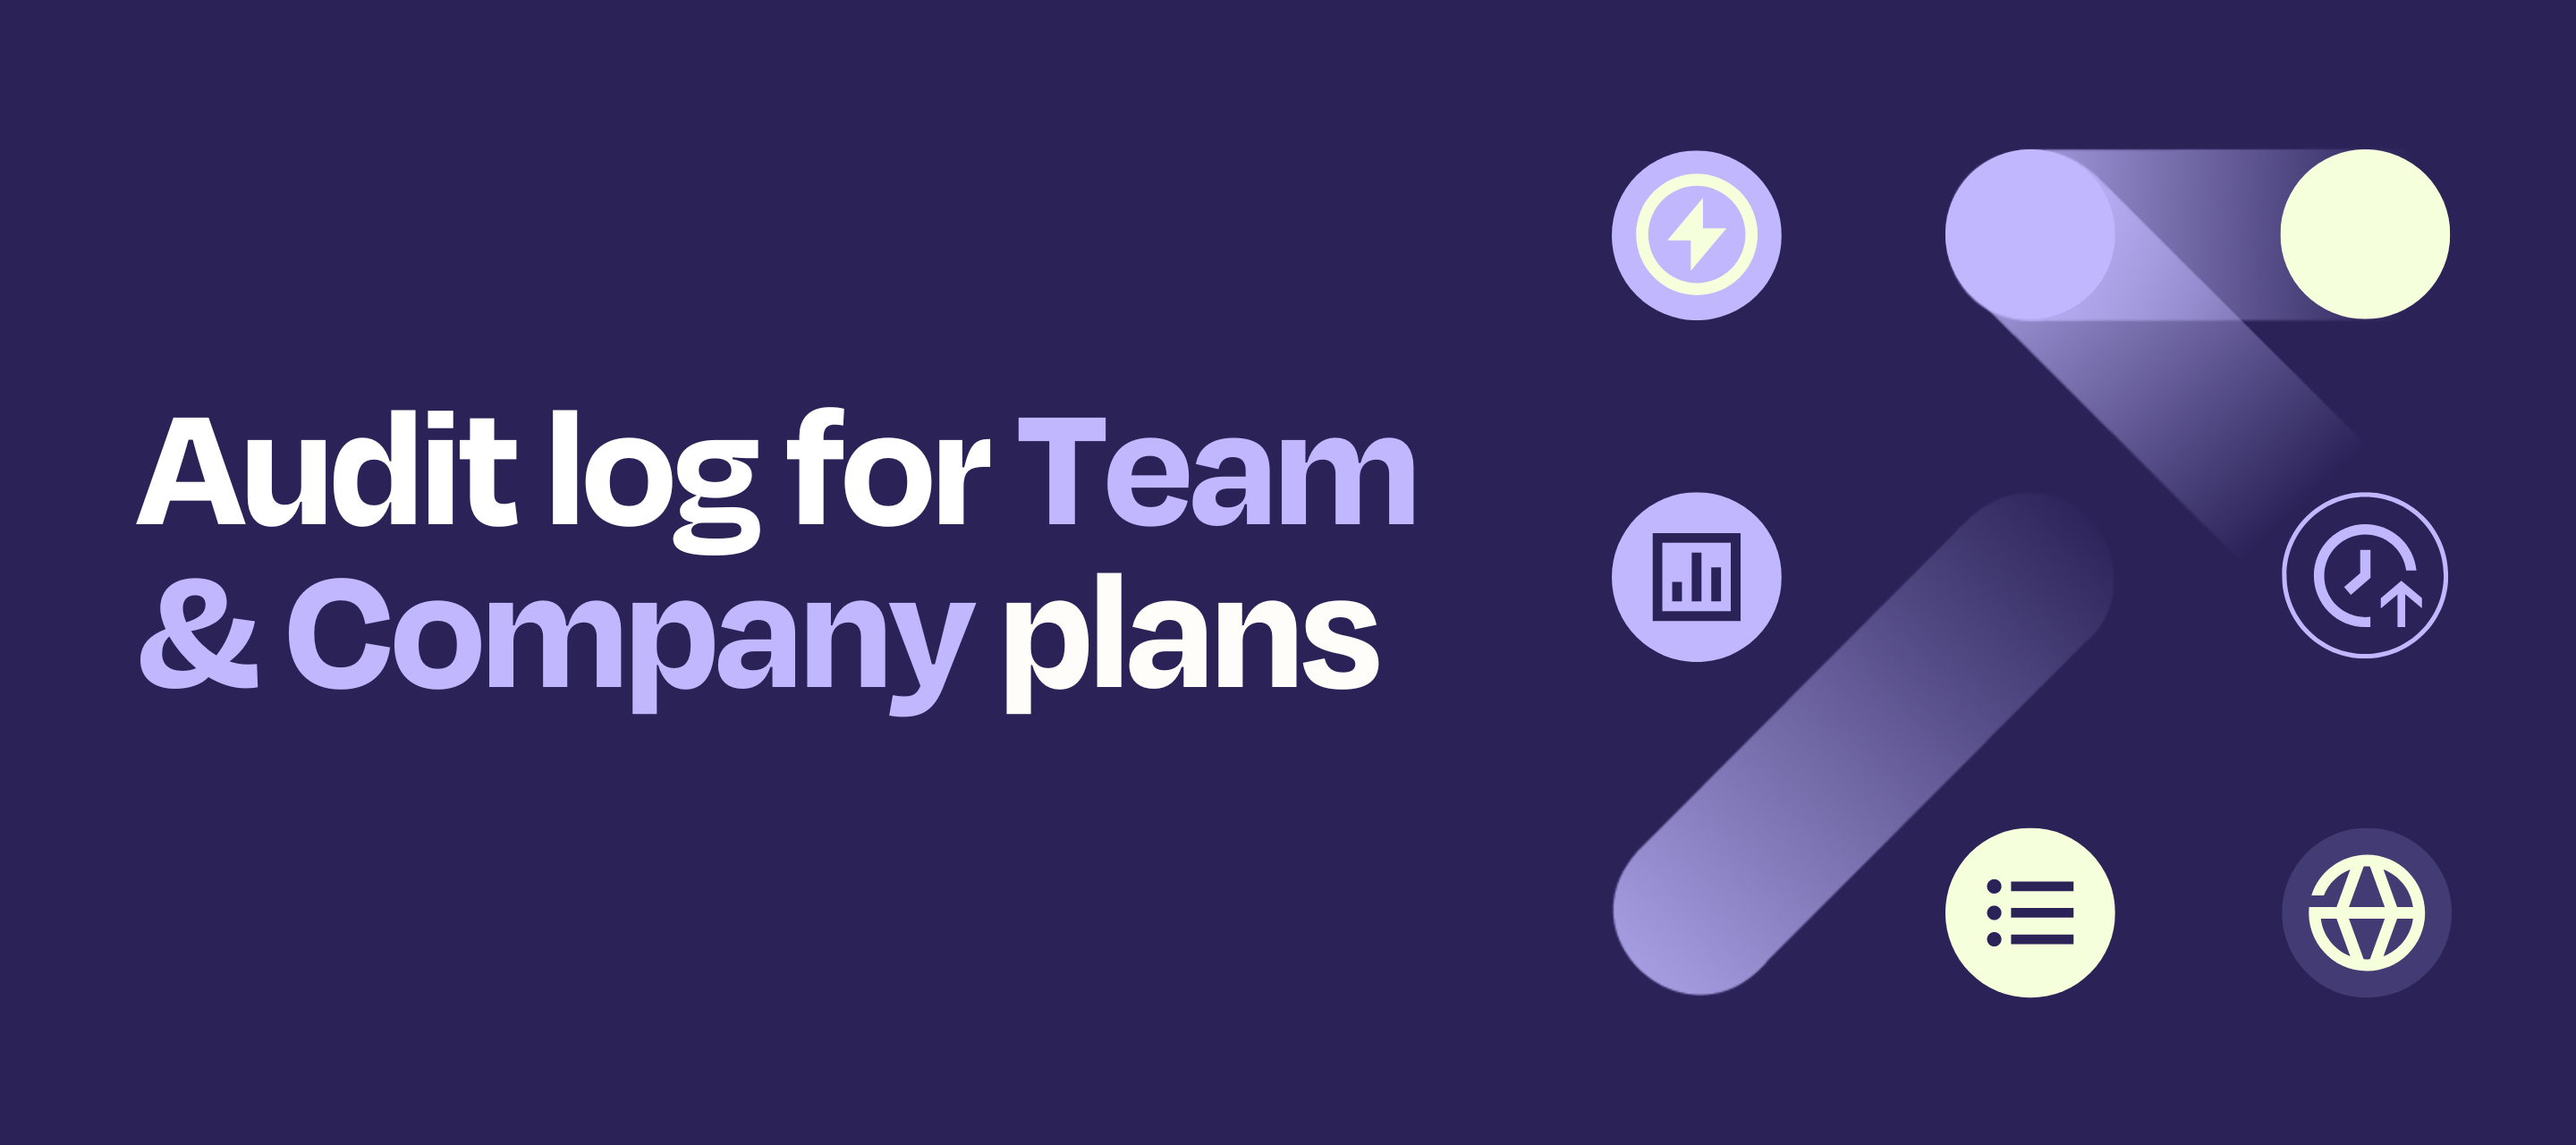 New: Audit log for Team & Company plans